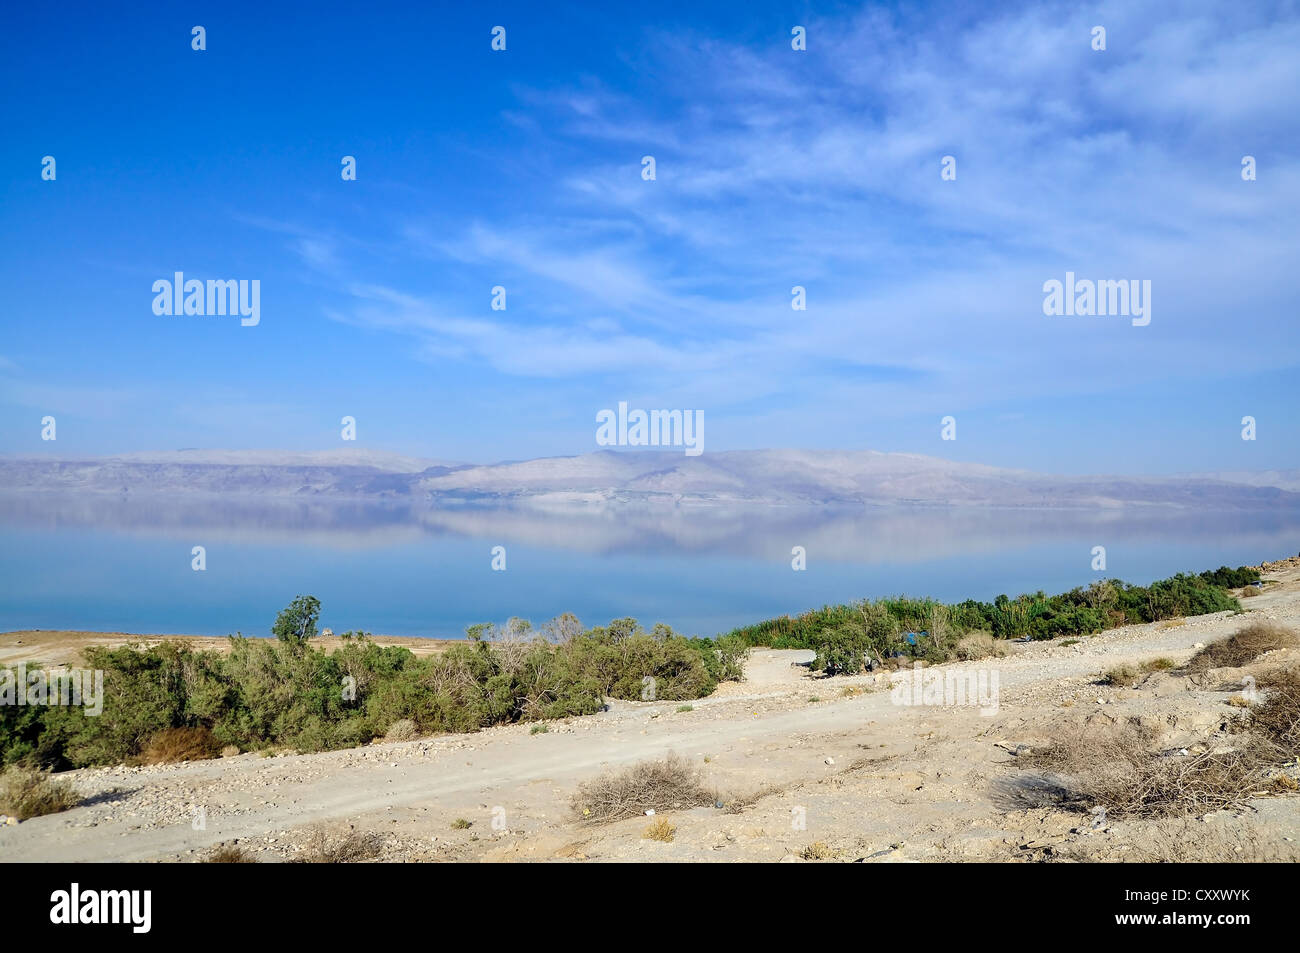 Paysage. Beau reflet dans la mer Morte en Israël. Banque D'Images